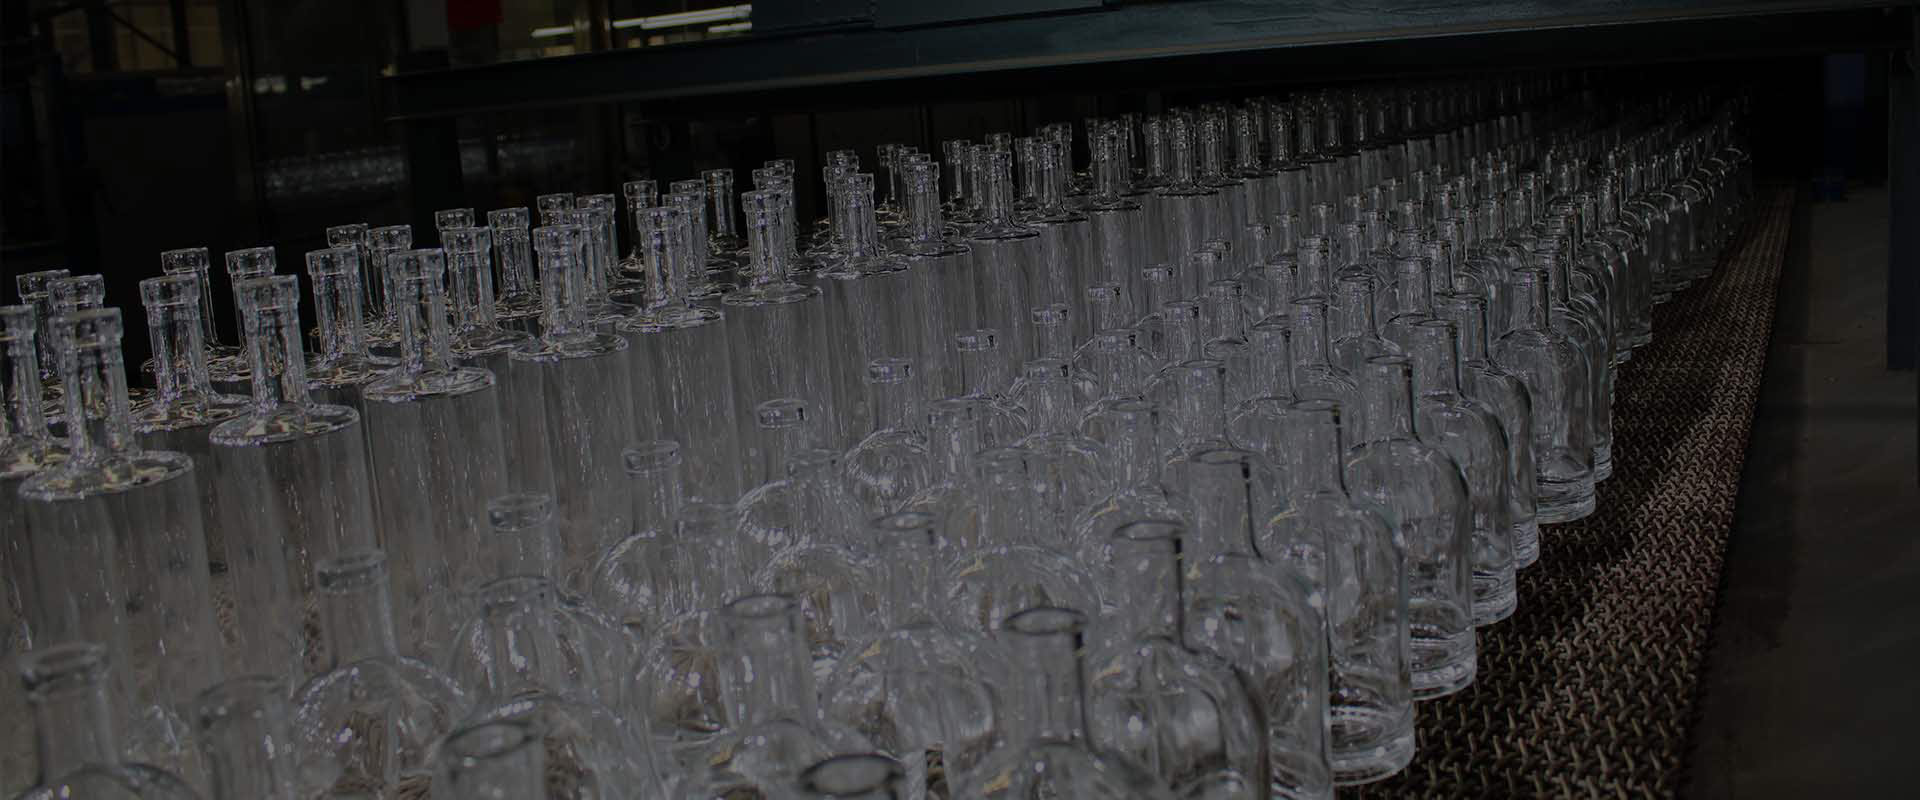 Glass Bottle Order Process